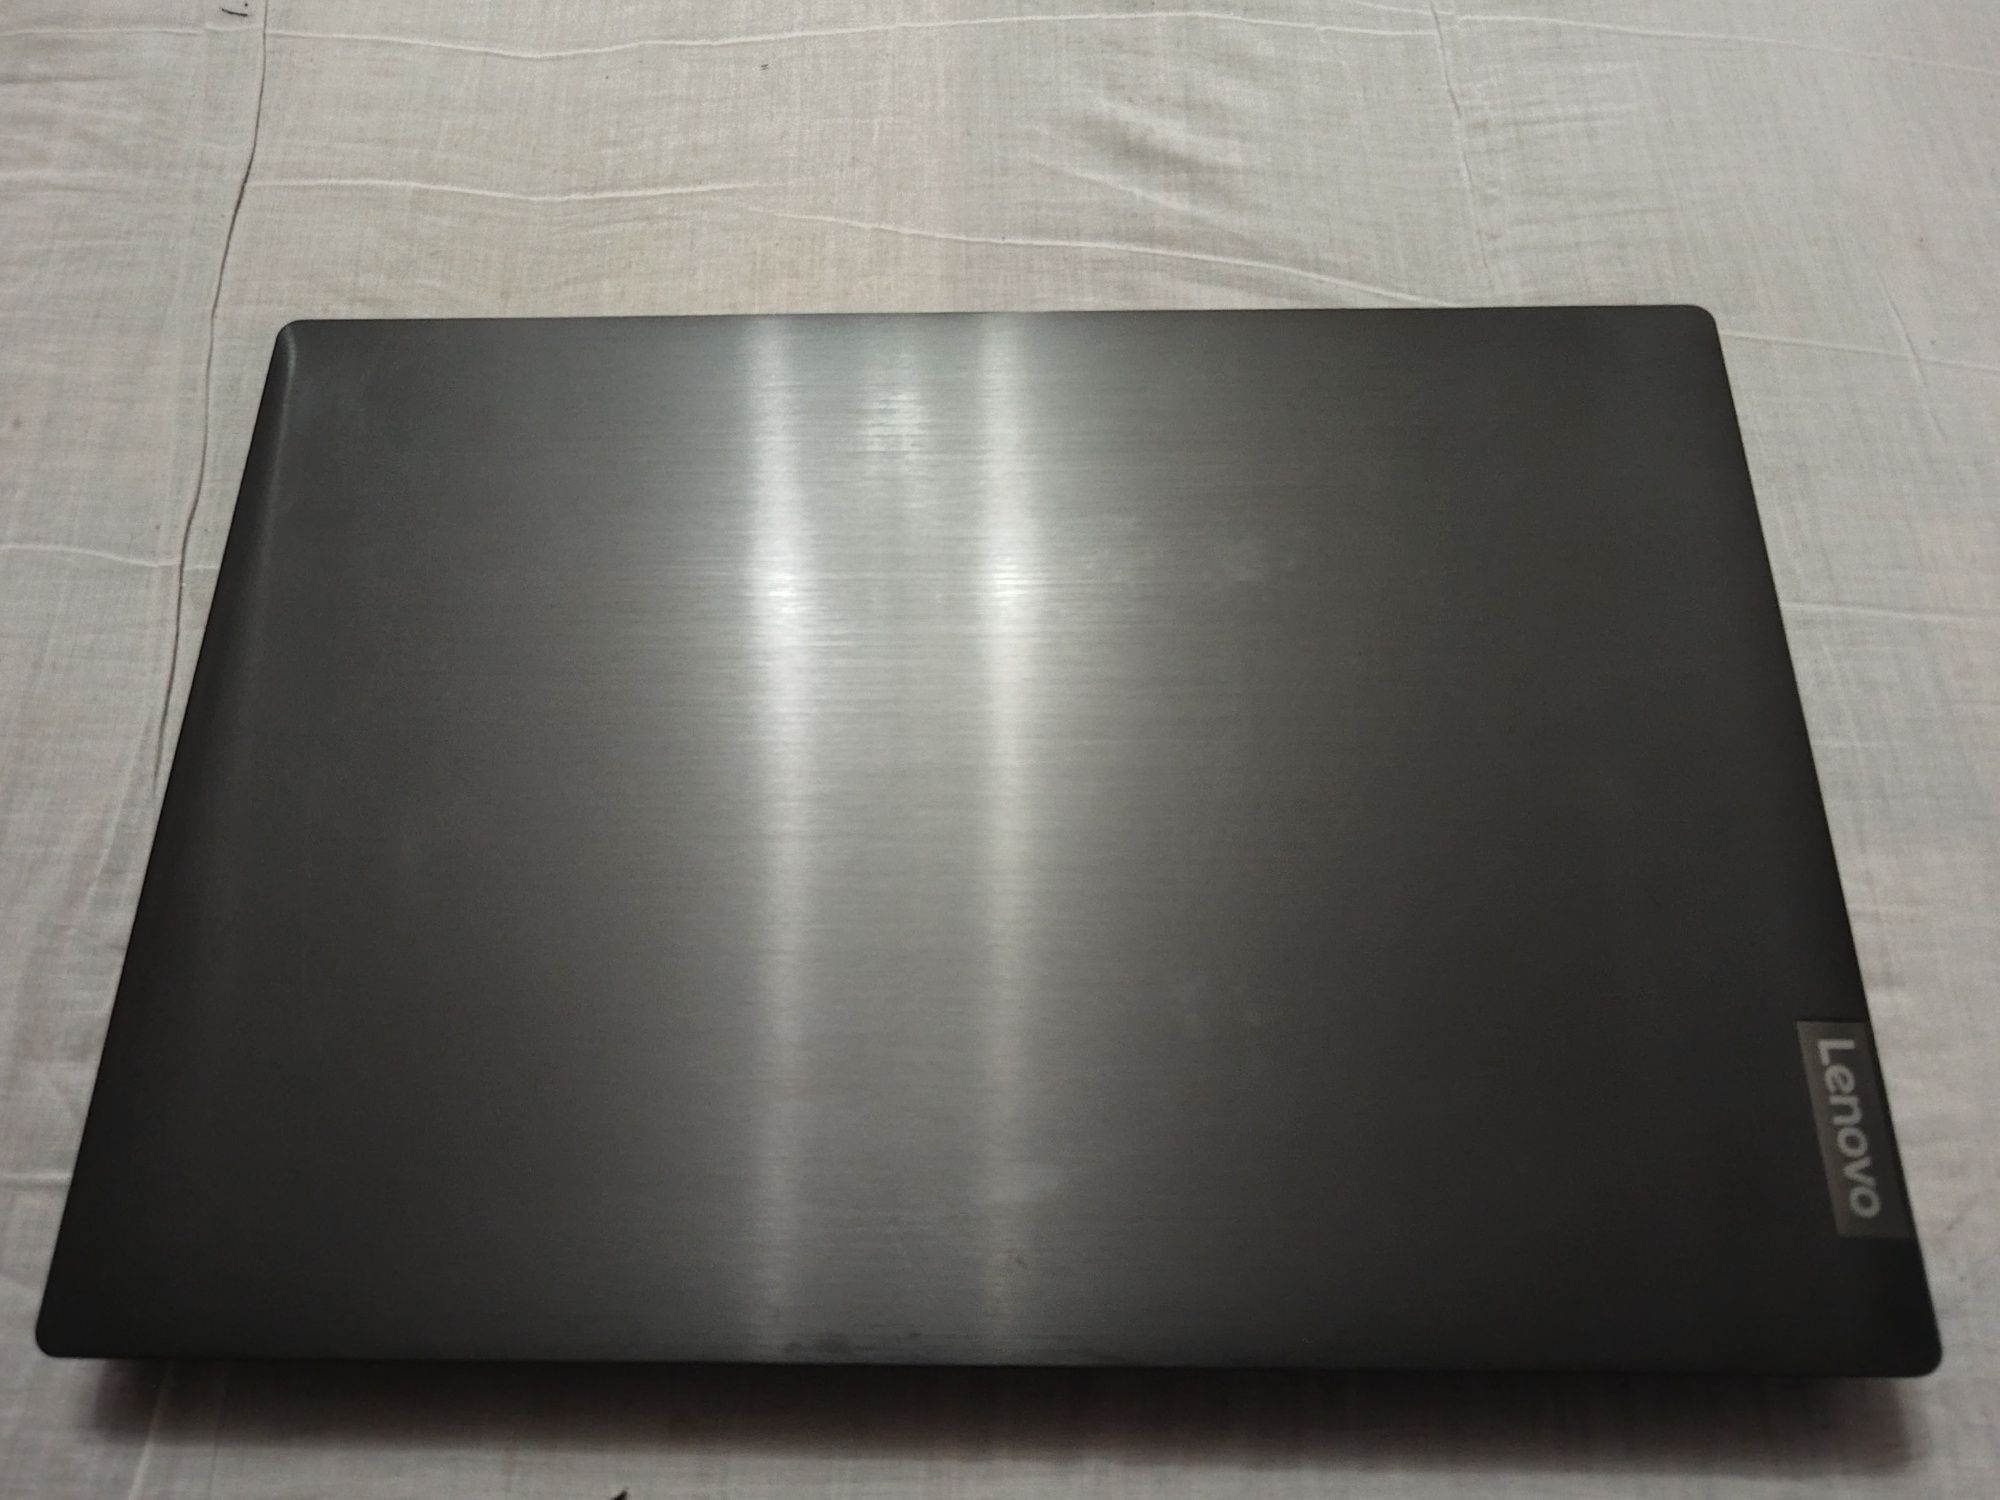 Ноутбук Lenovo IdeaPad L340 + Lenovo G565